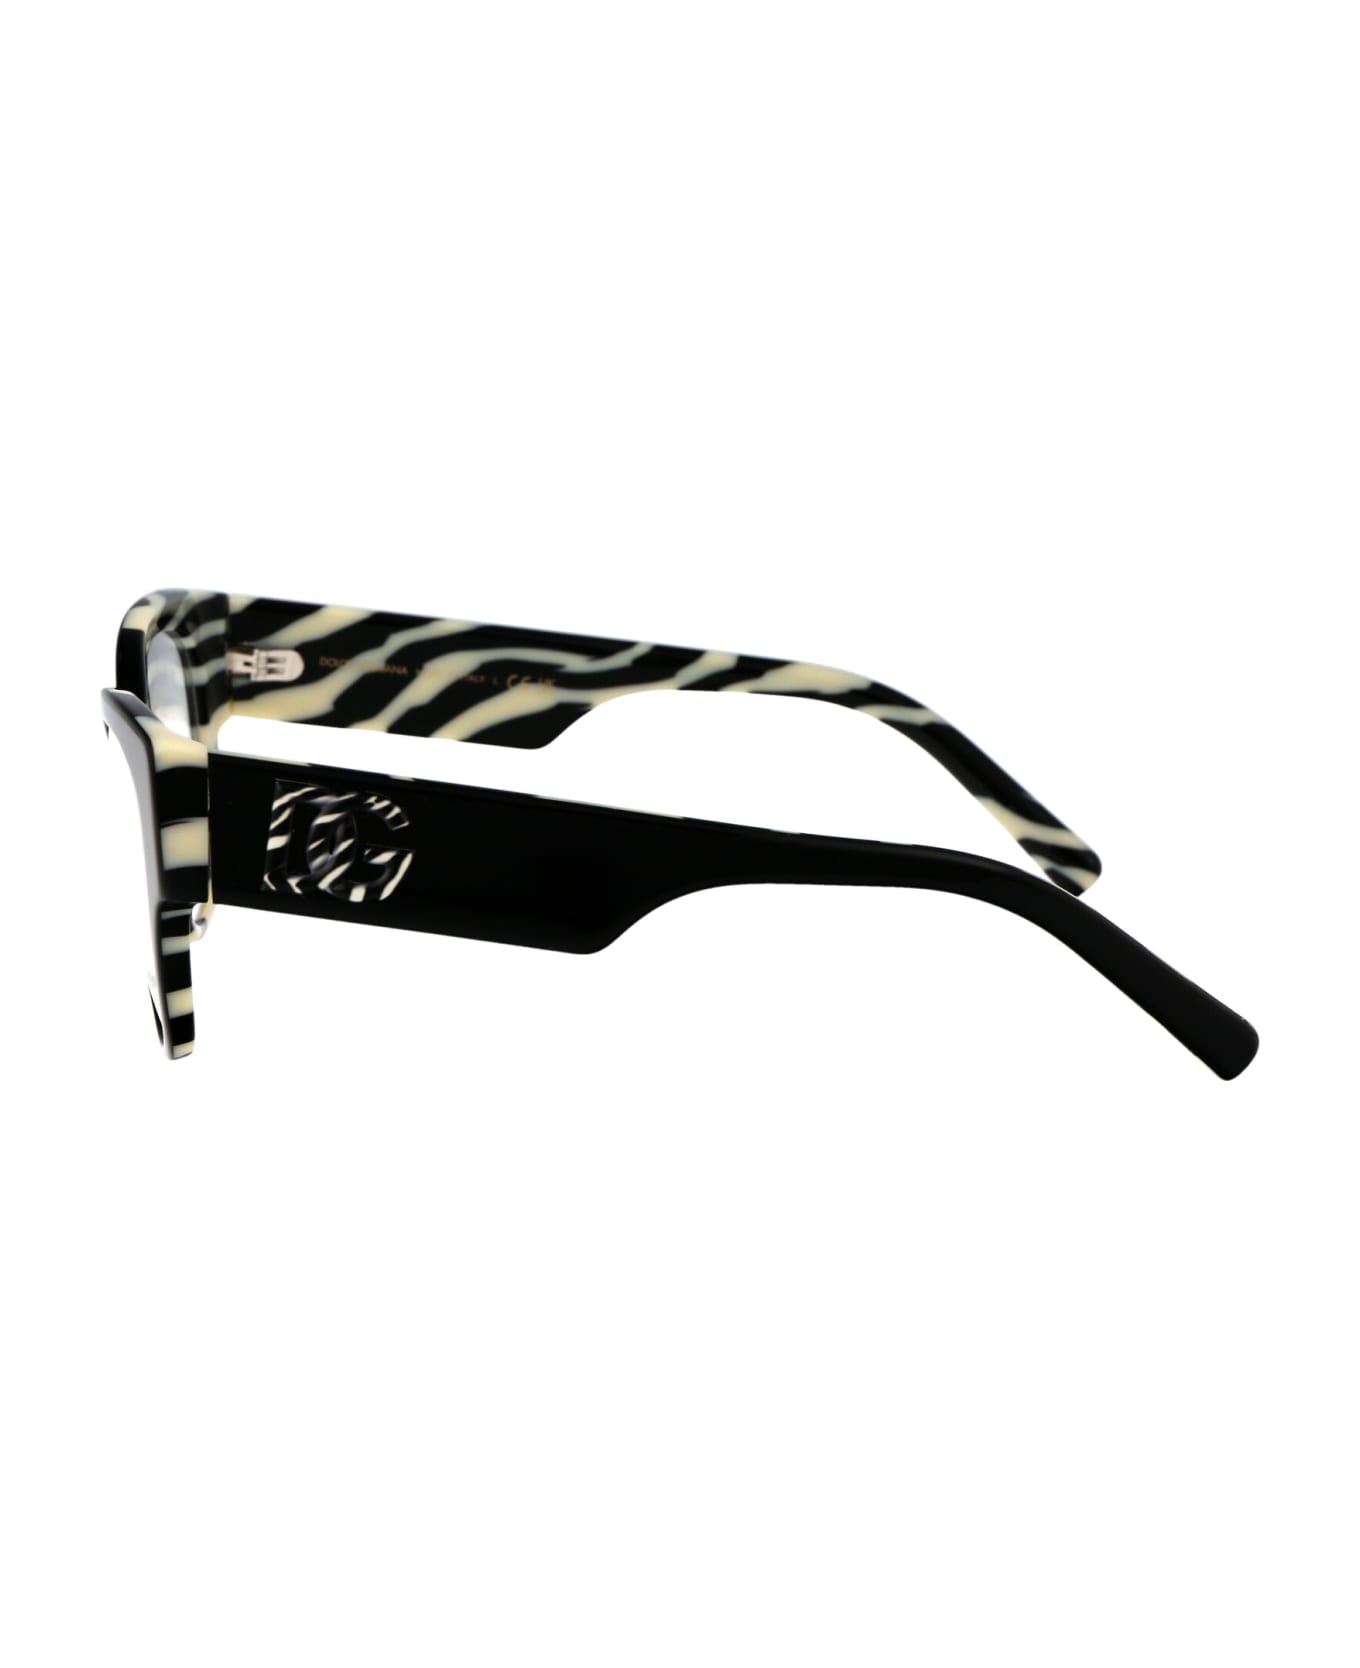 Dolce & Gabbana Eyewear 0dg3377 Glasses - 3372 Black On Zebra